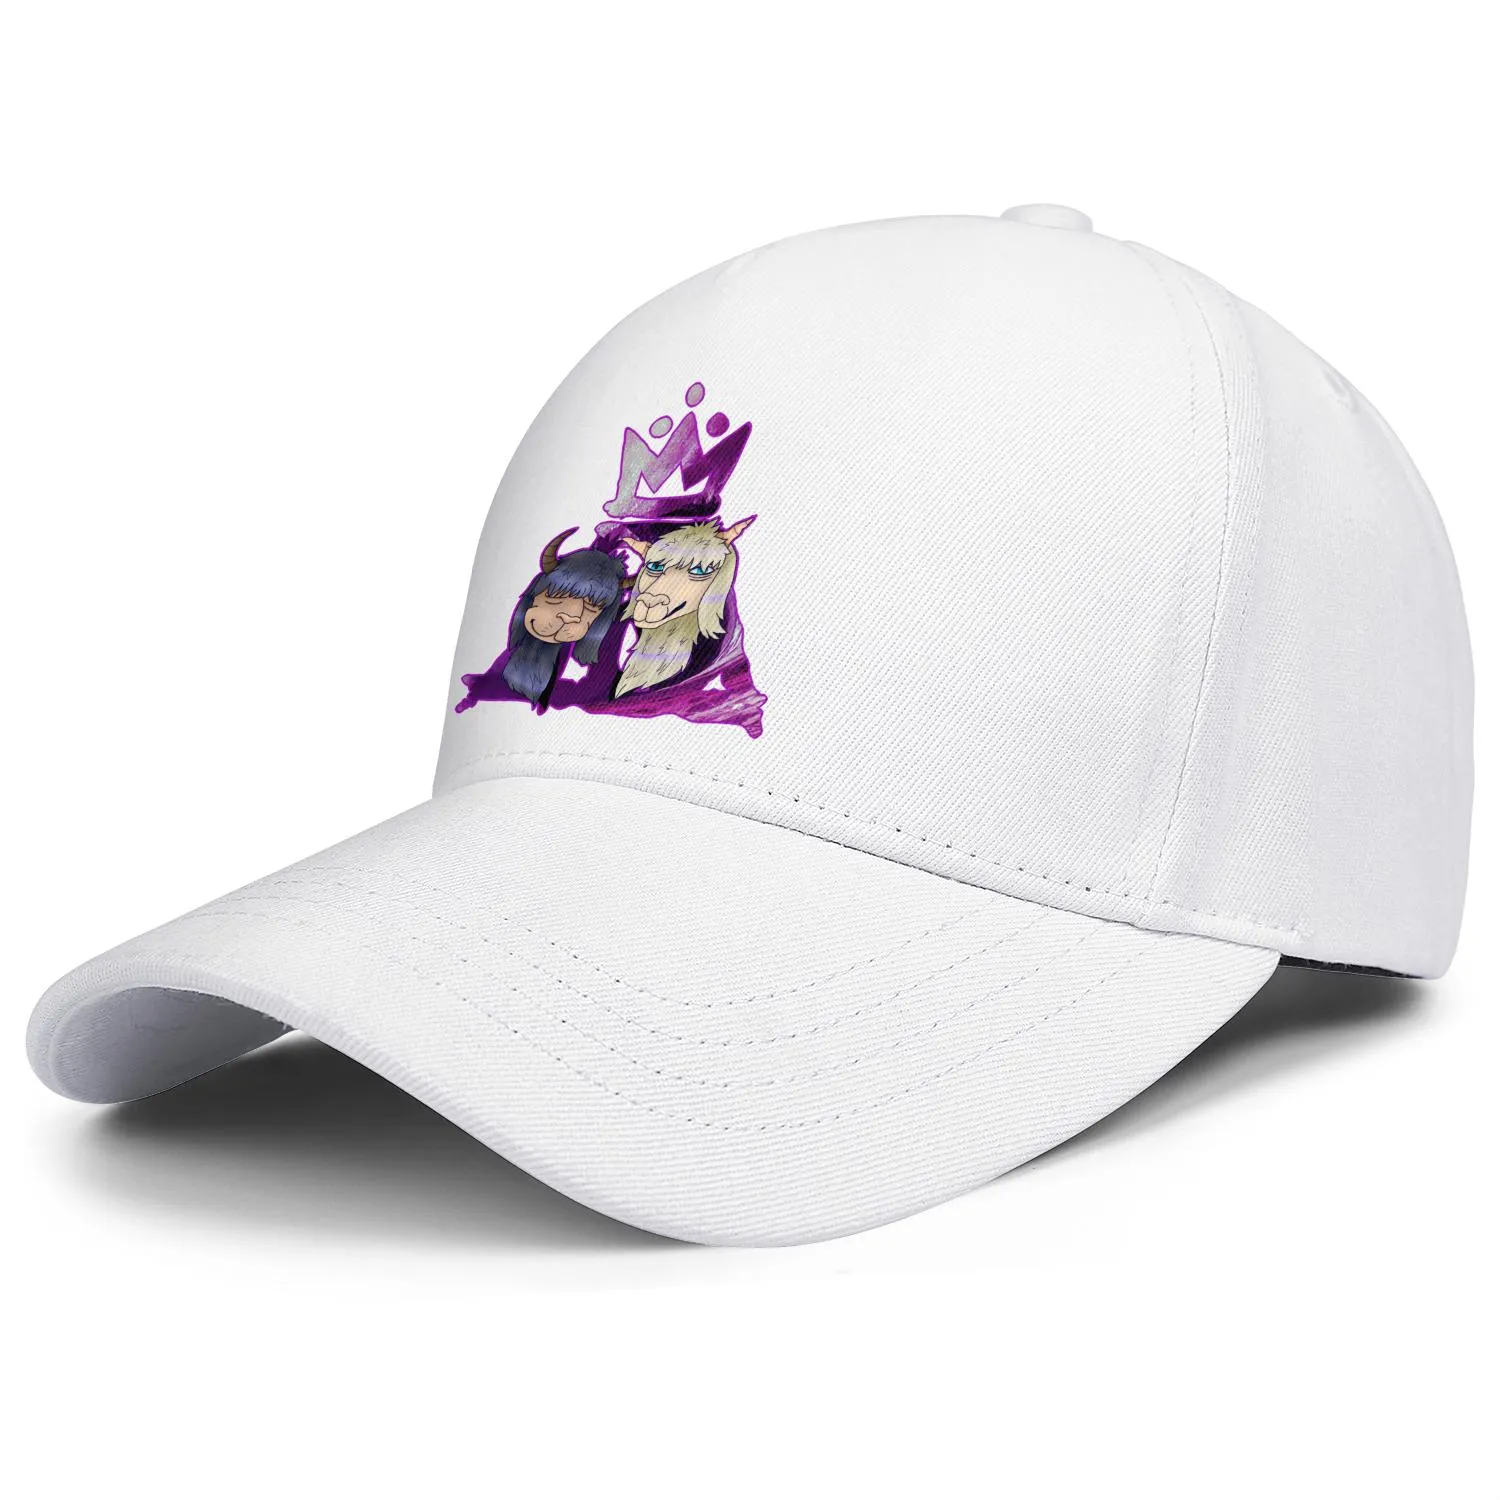 men039s و women039s capball Caps Custom Graphics Fashion Hat Hat Fall Out Boy Mania Funny Got Away Animal Rock AN4792786